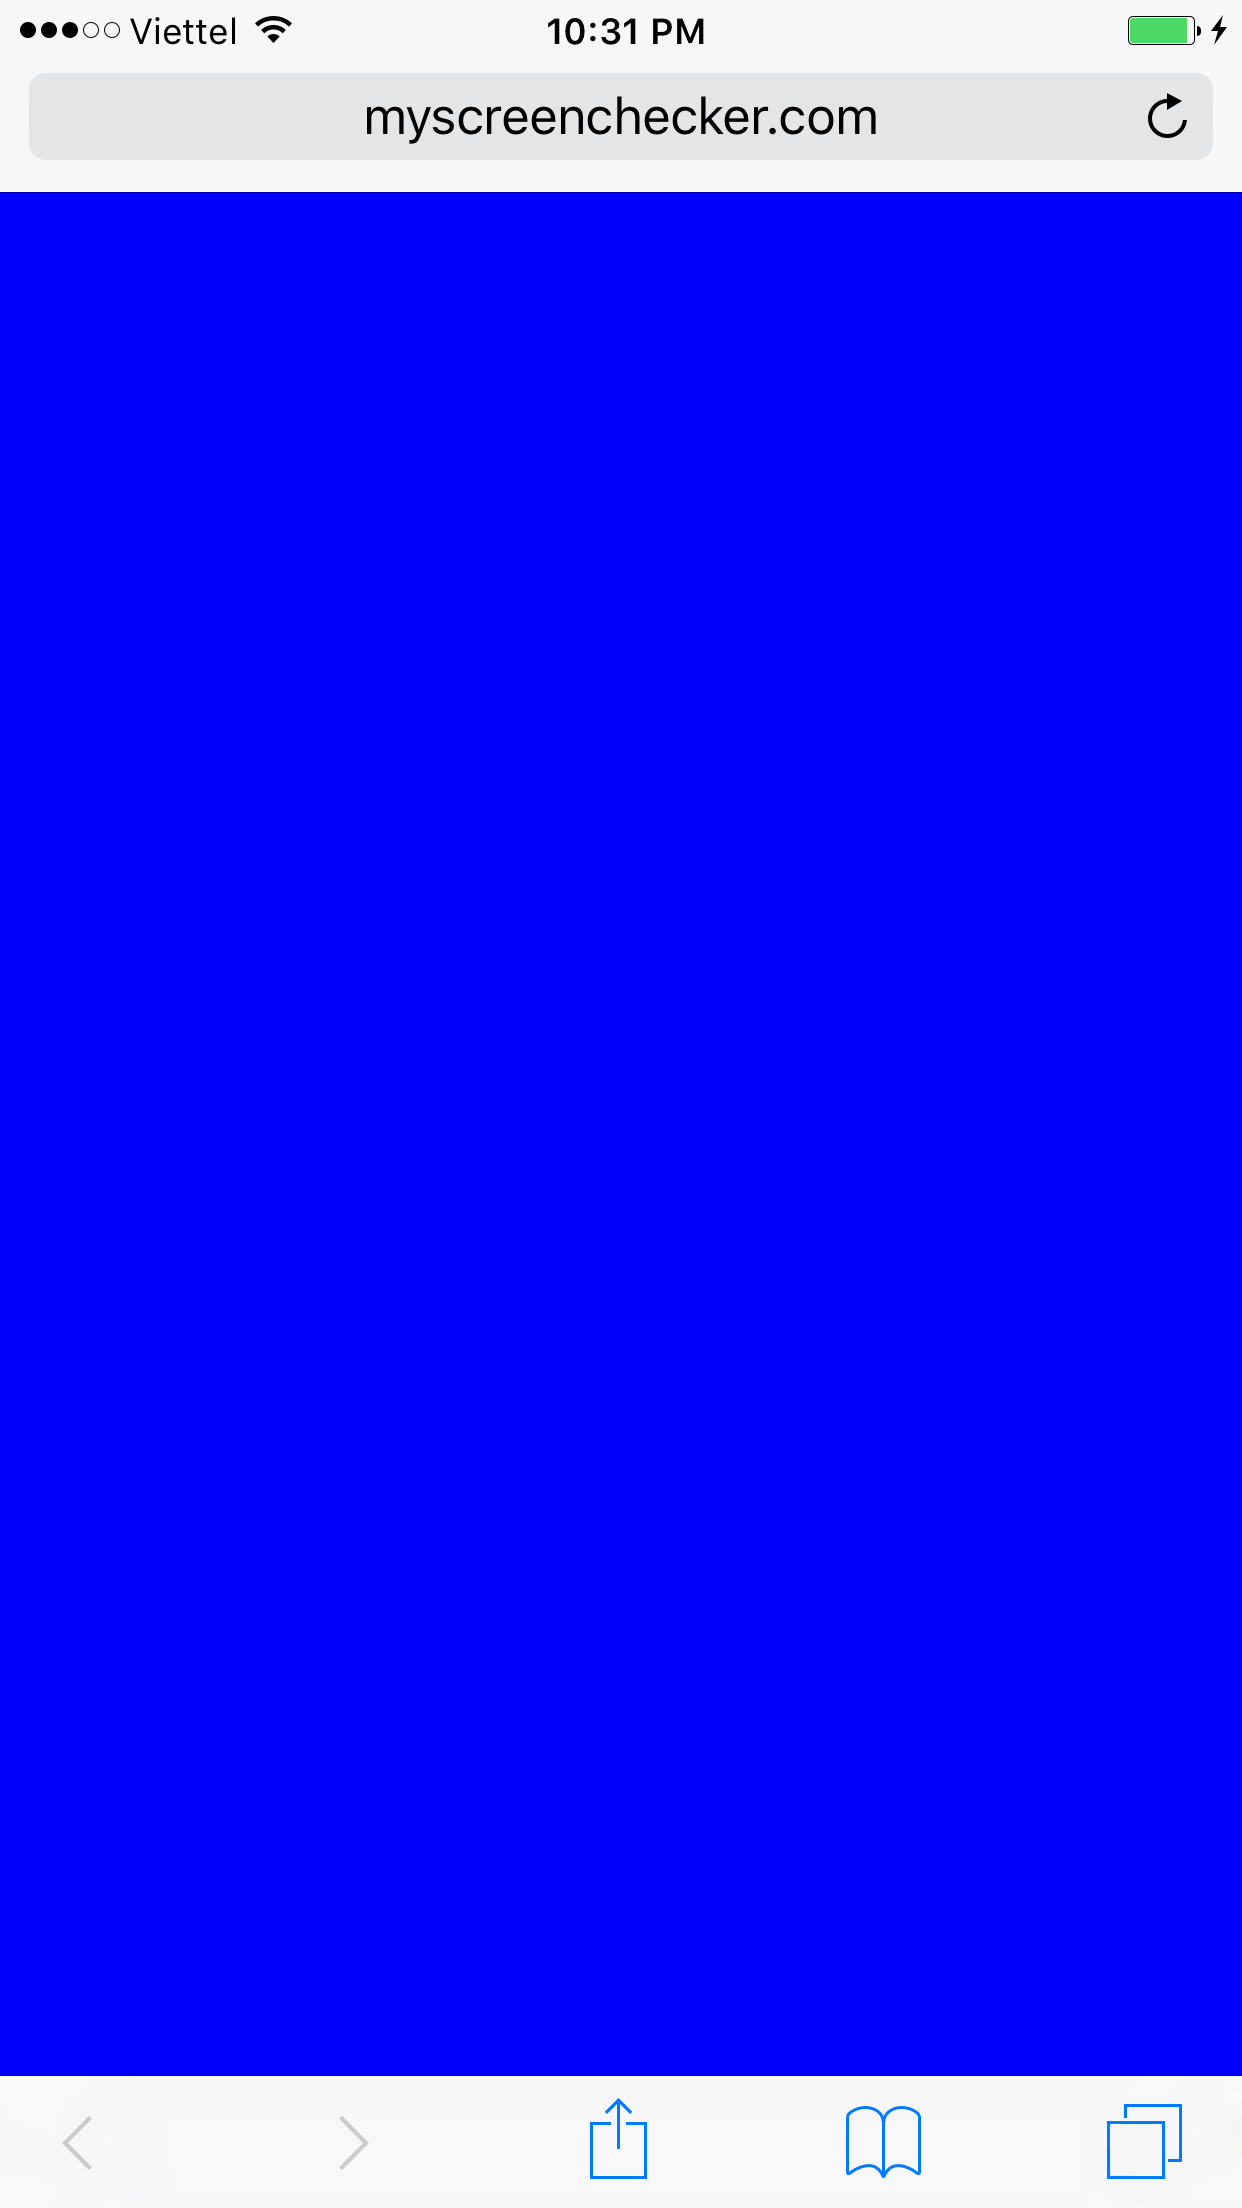 myscreenchecker.com_blue_vertical.PNG